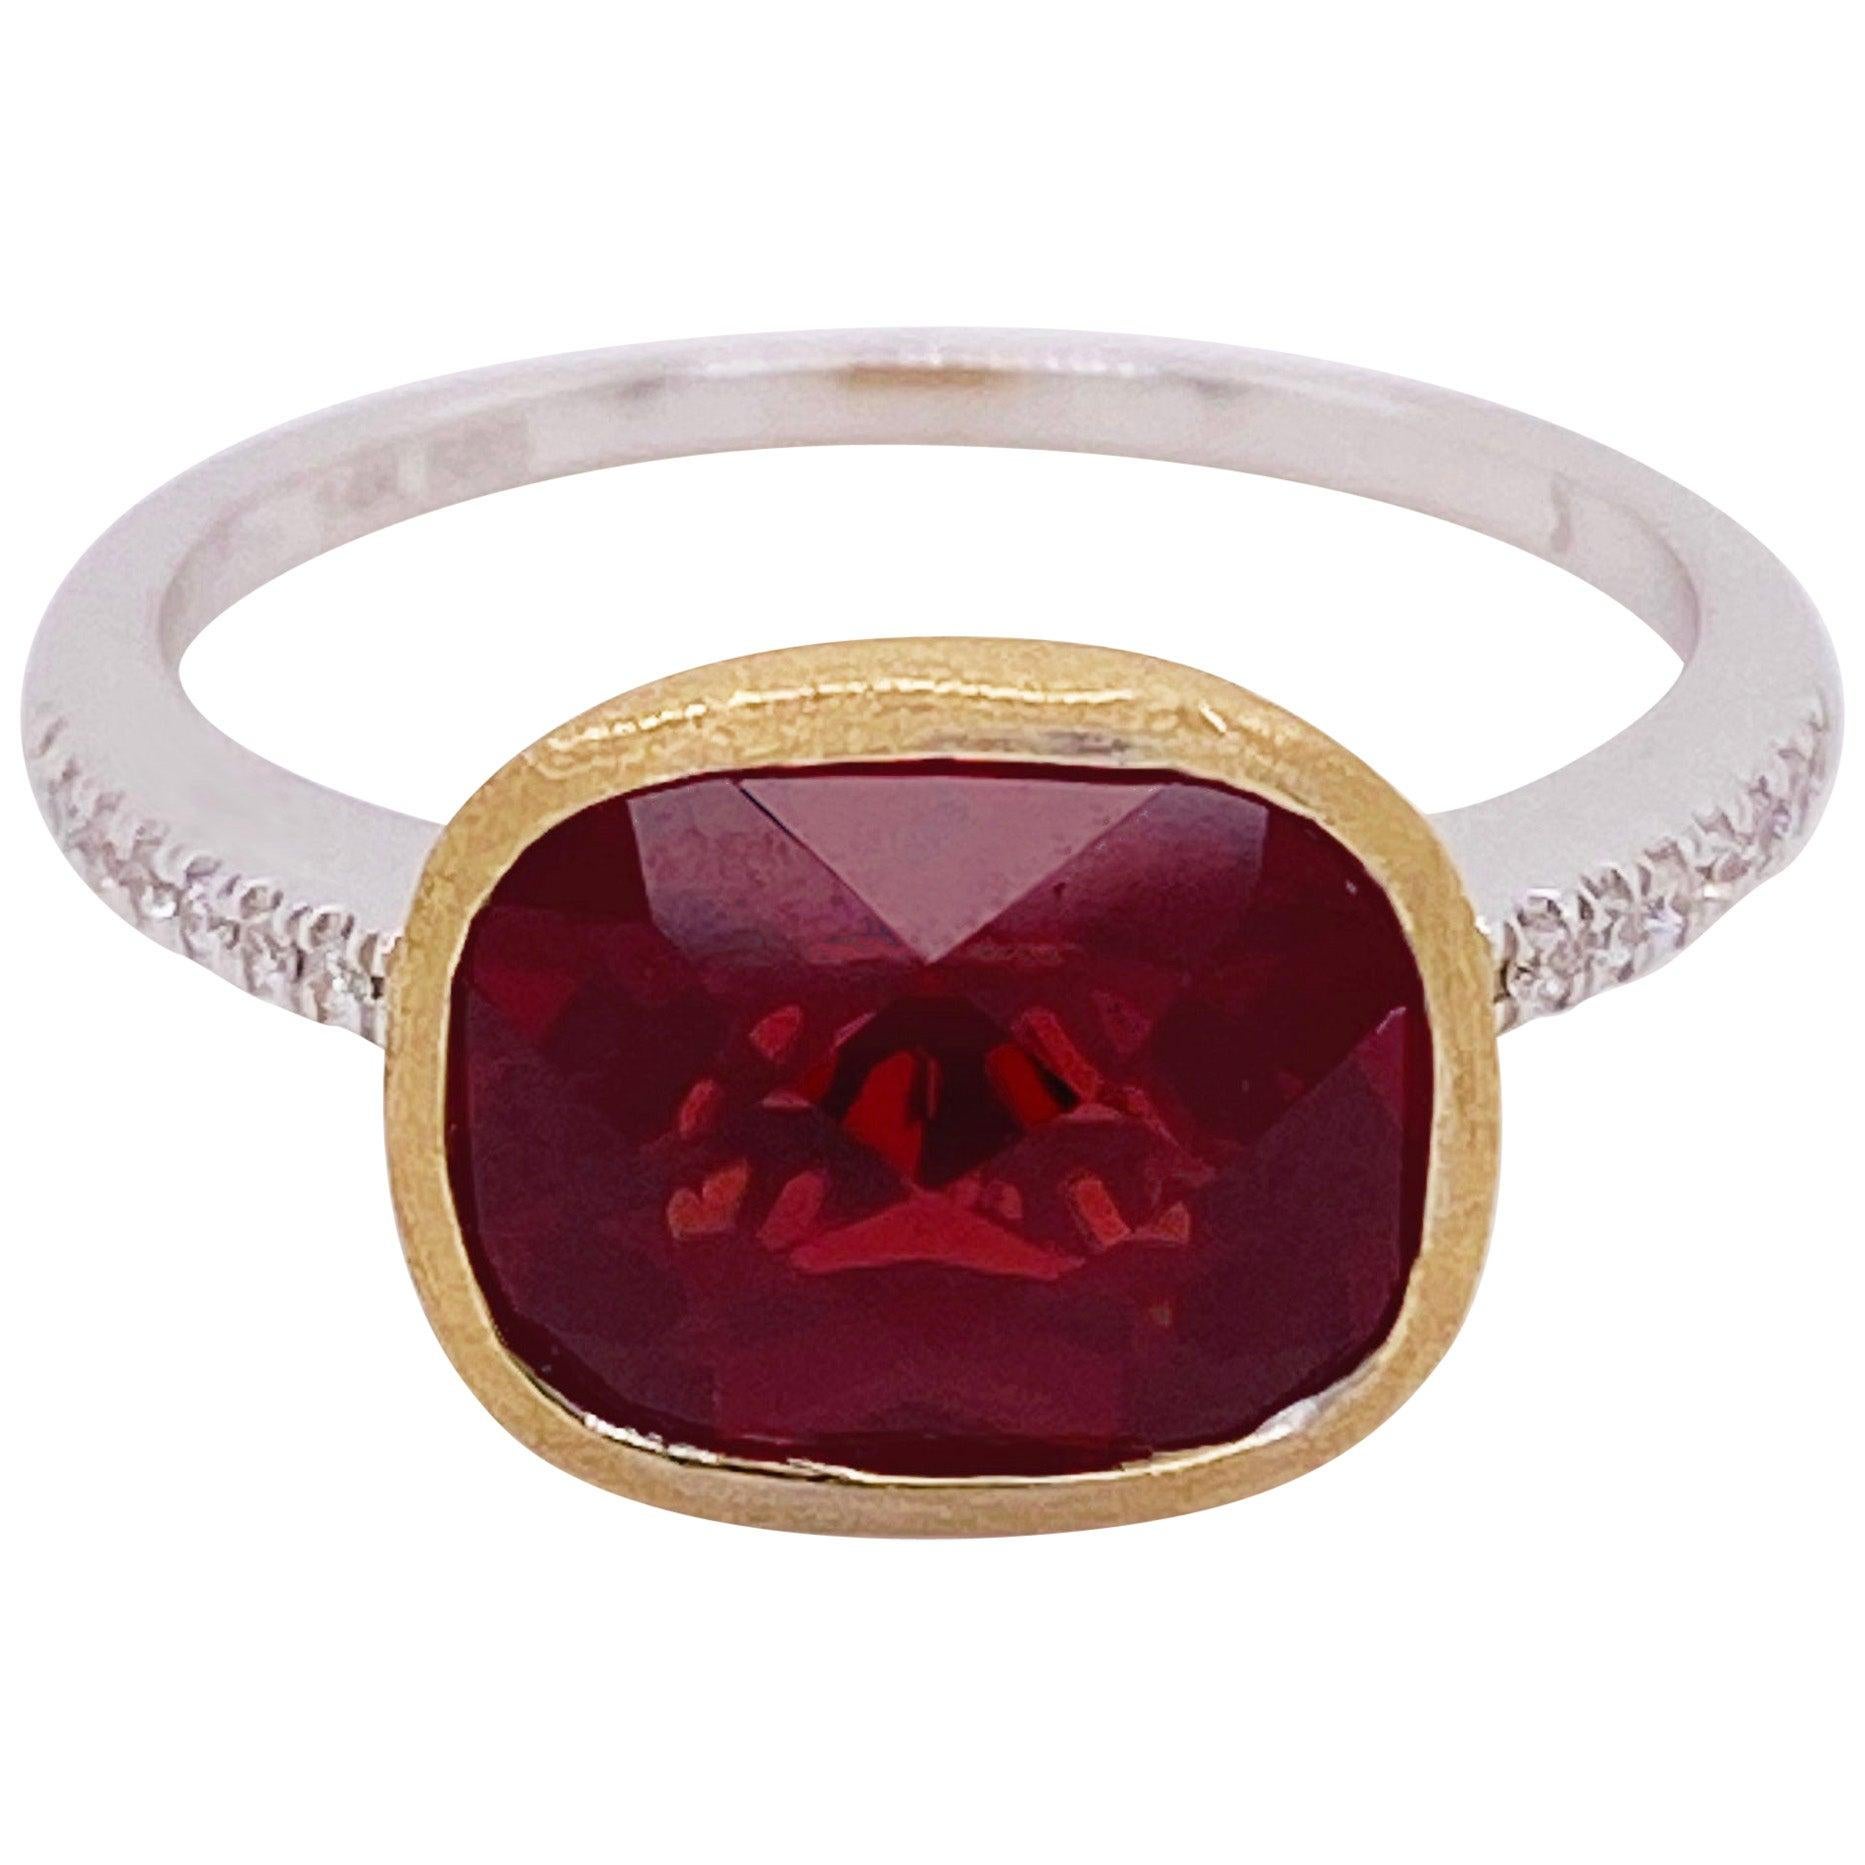 For Sale:  Garnet Diamond Ring, Red Garnet, Mixed Metal, 14k White and Yellow Gold, Satin